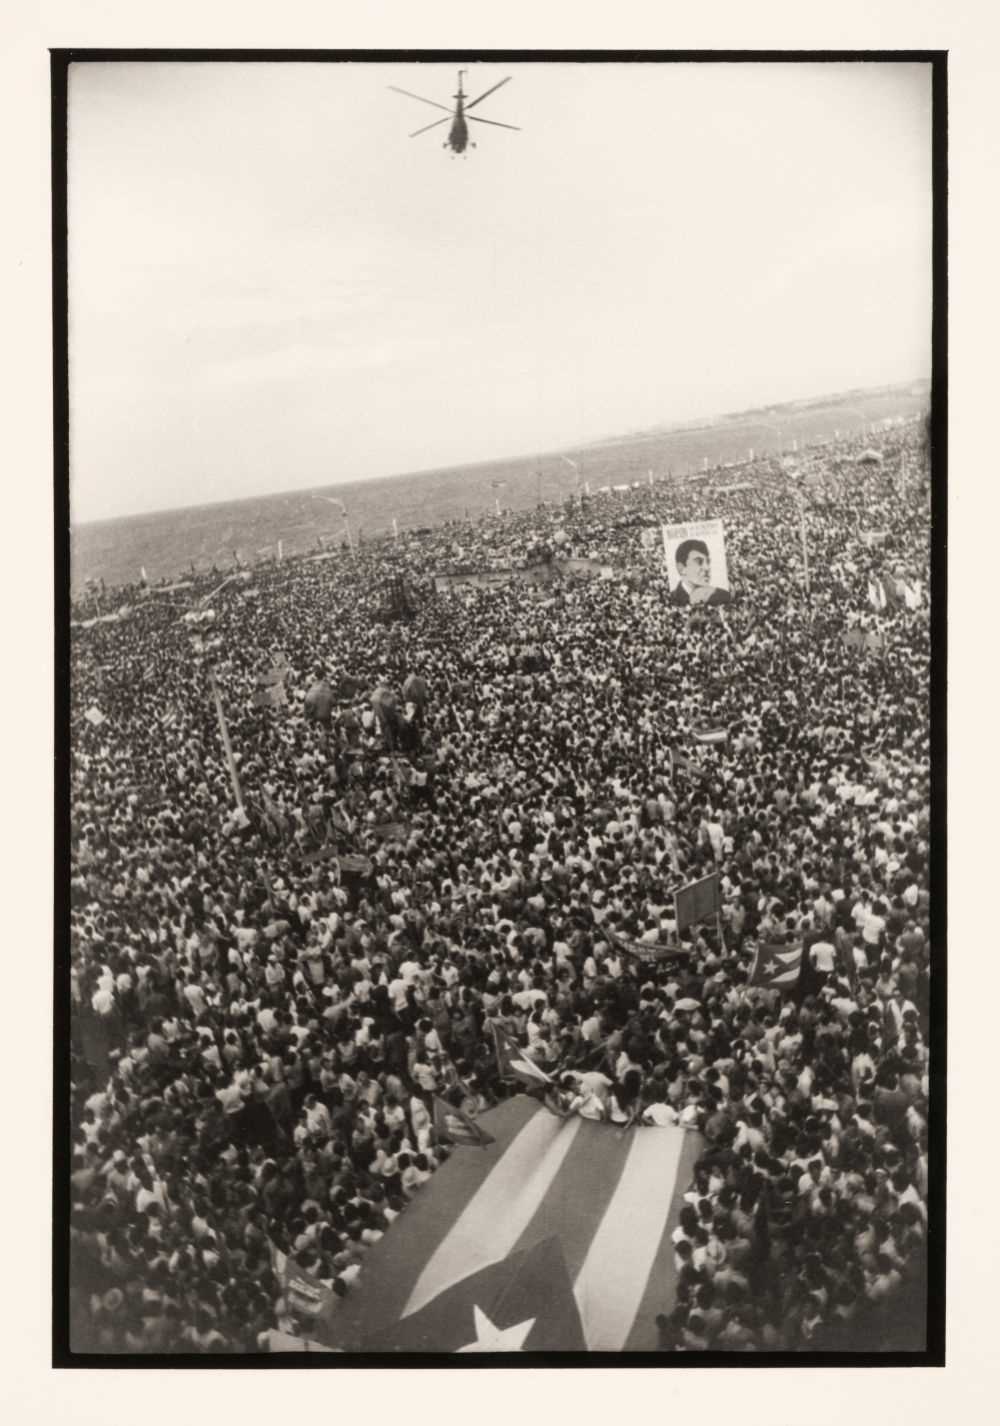 Lot 26 - Cuba. Revolution Square, Havana, 1970, by José A. Figueroa (1946-), gelatin silver print